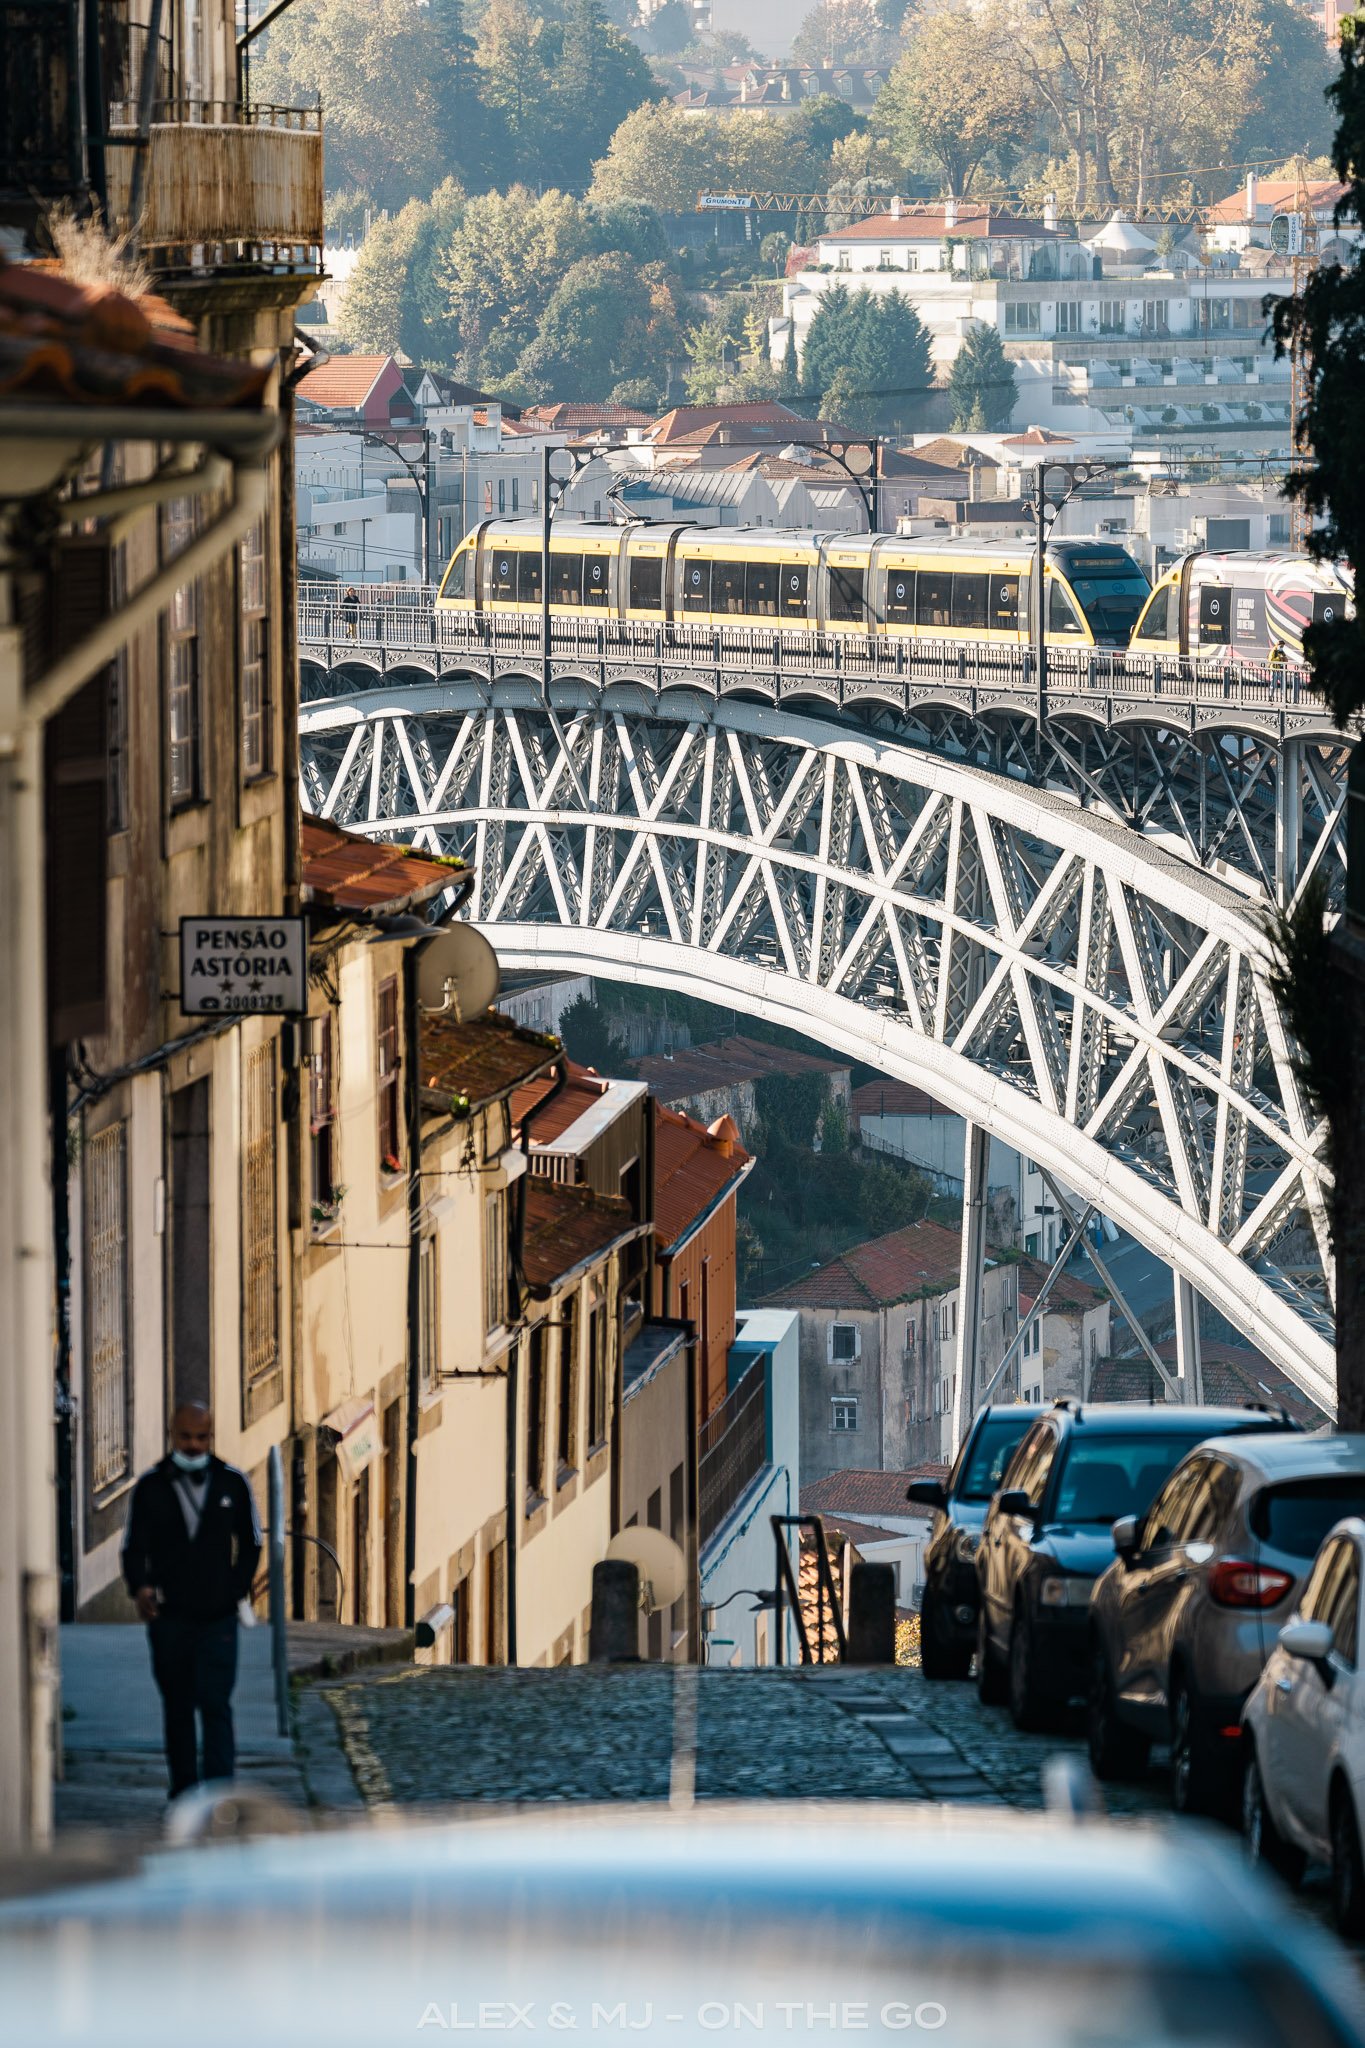 Alex-MJ-On-the-GO-Portugal_itinéraire_Porto_pont et tram.jpg